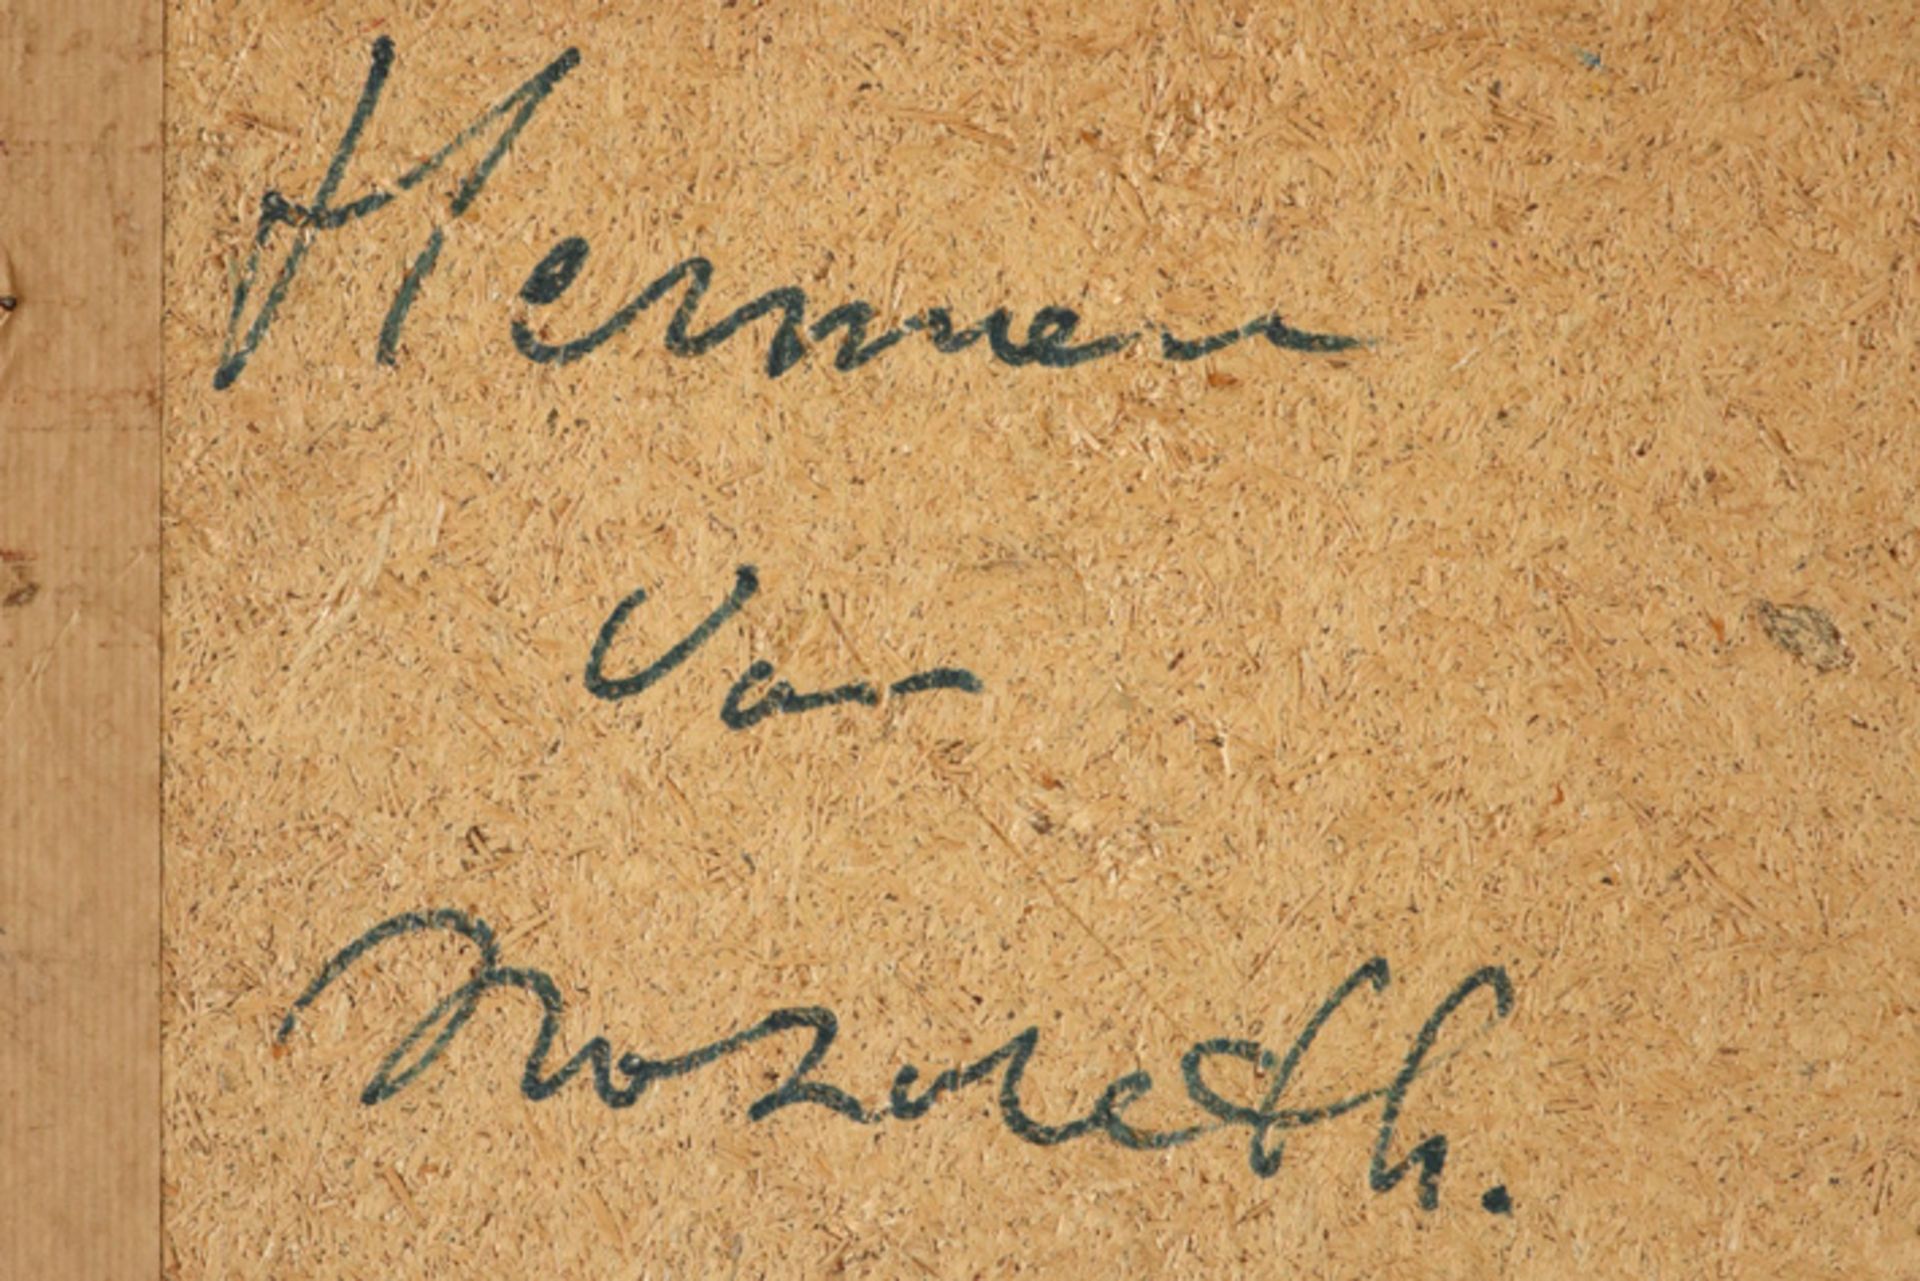 20th Cent. Belgian oil on panel - signed Herman van Nazareth || VAN NAZARETH HERMAN (° 1936) - Image 4 of 4